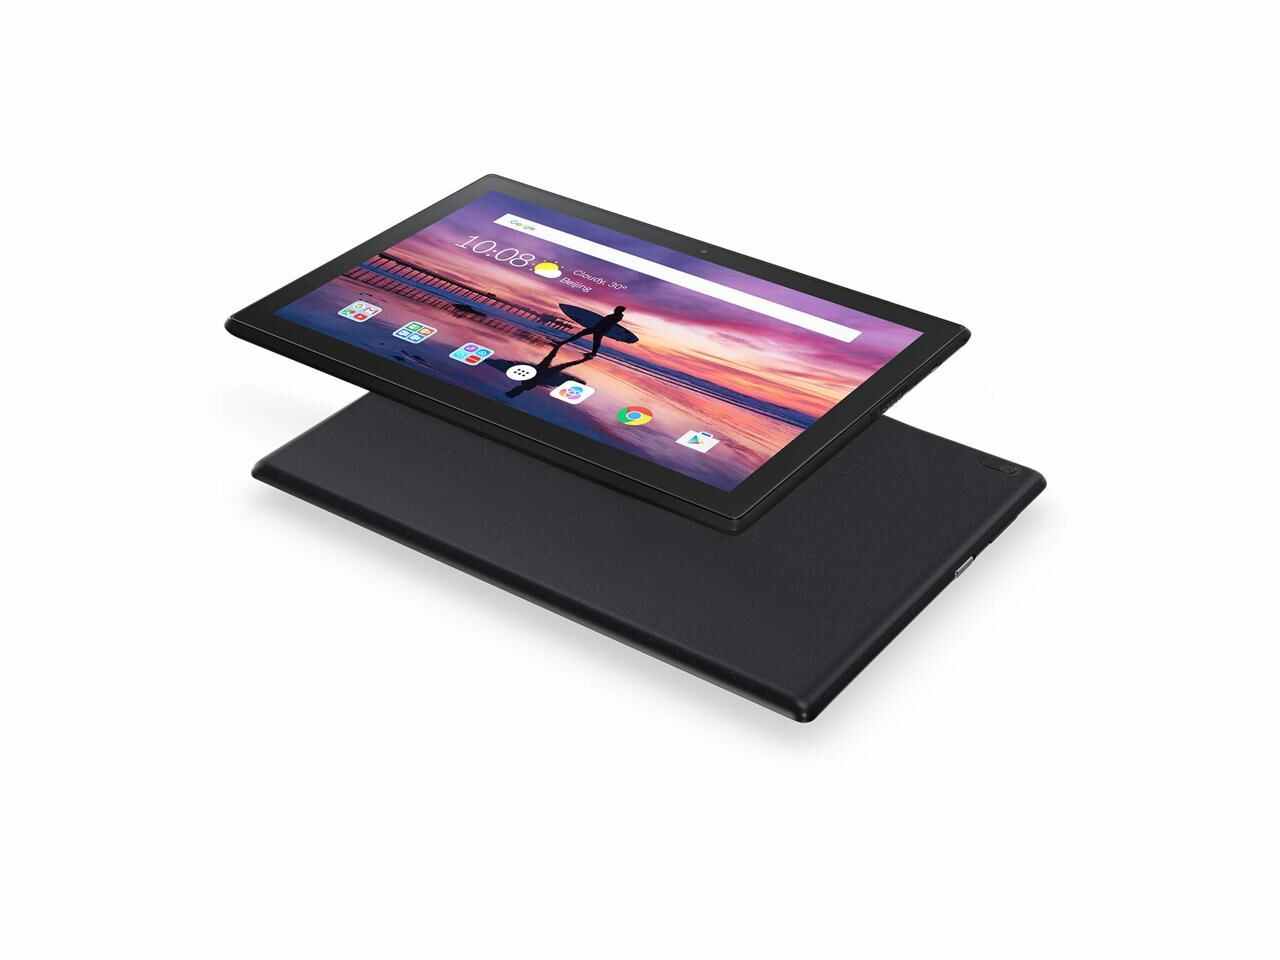 Lenovo Tab 4 10 Plus 10.1 inch FHD+ (1920x1200) Android Tablet Touchscreen (Octa-Core Qualcomm Snapdragon MSM8953/625 2.0GHz Processor, 2GB RAM, 32GB eMMC) 4G-LTE Unlocked, Dolby Atmos, Slate Black